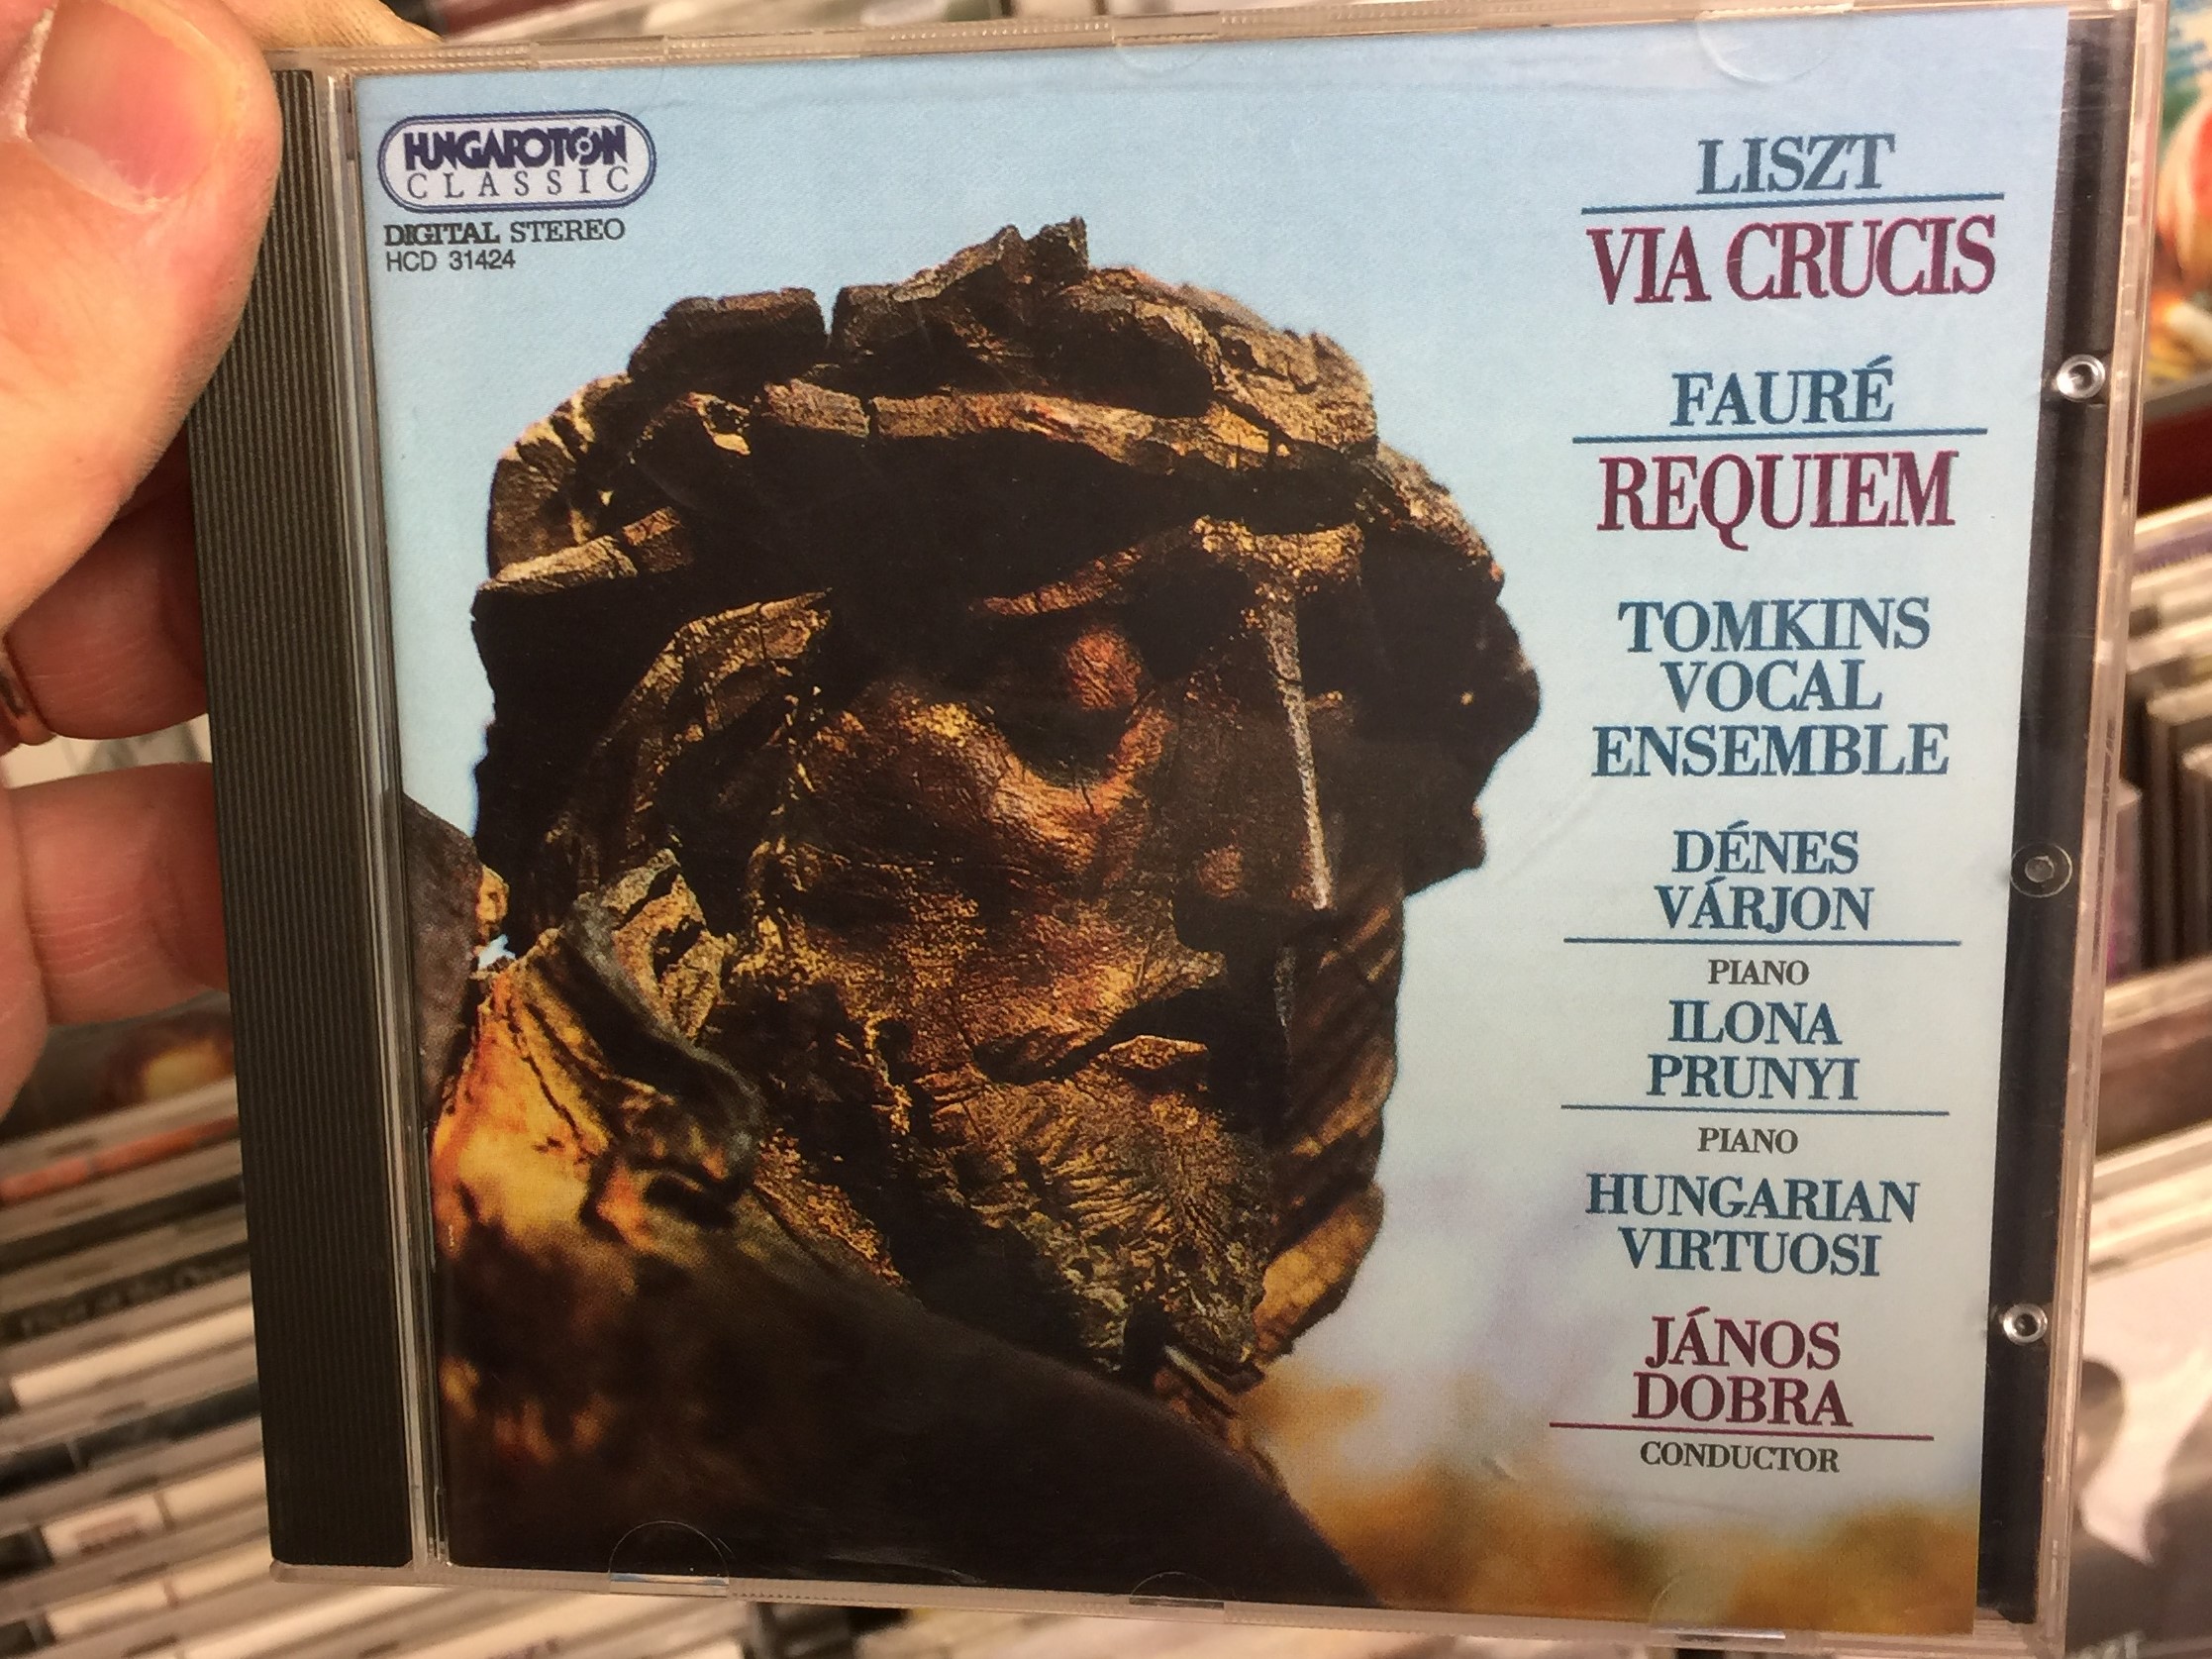 liszt-via-crucis-faur-requiem-tomkins-vocal-ensemble-d-nes-v-rjon-ilona-prunyi-hungarian-virtuosi-janos-dobra-conductor-hungaroton-classic-audio-cd-1994-stereo-hcd-31424-1-.jpg